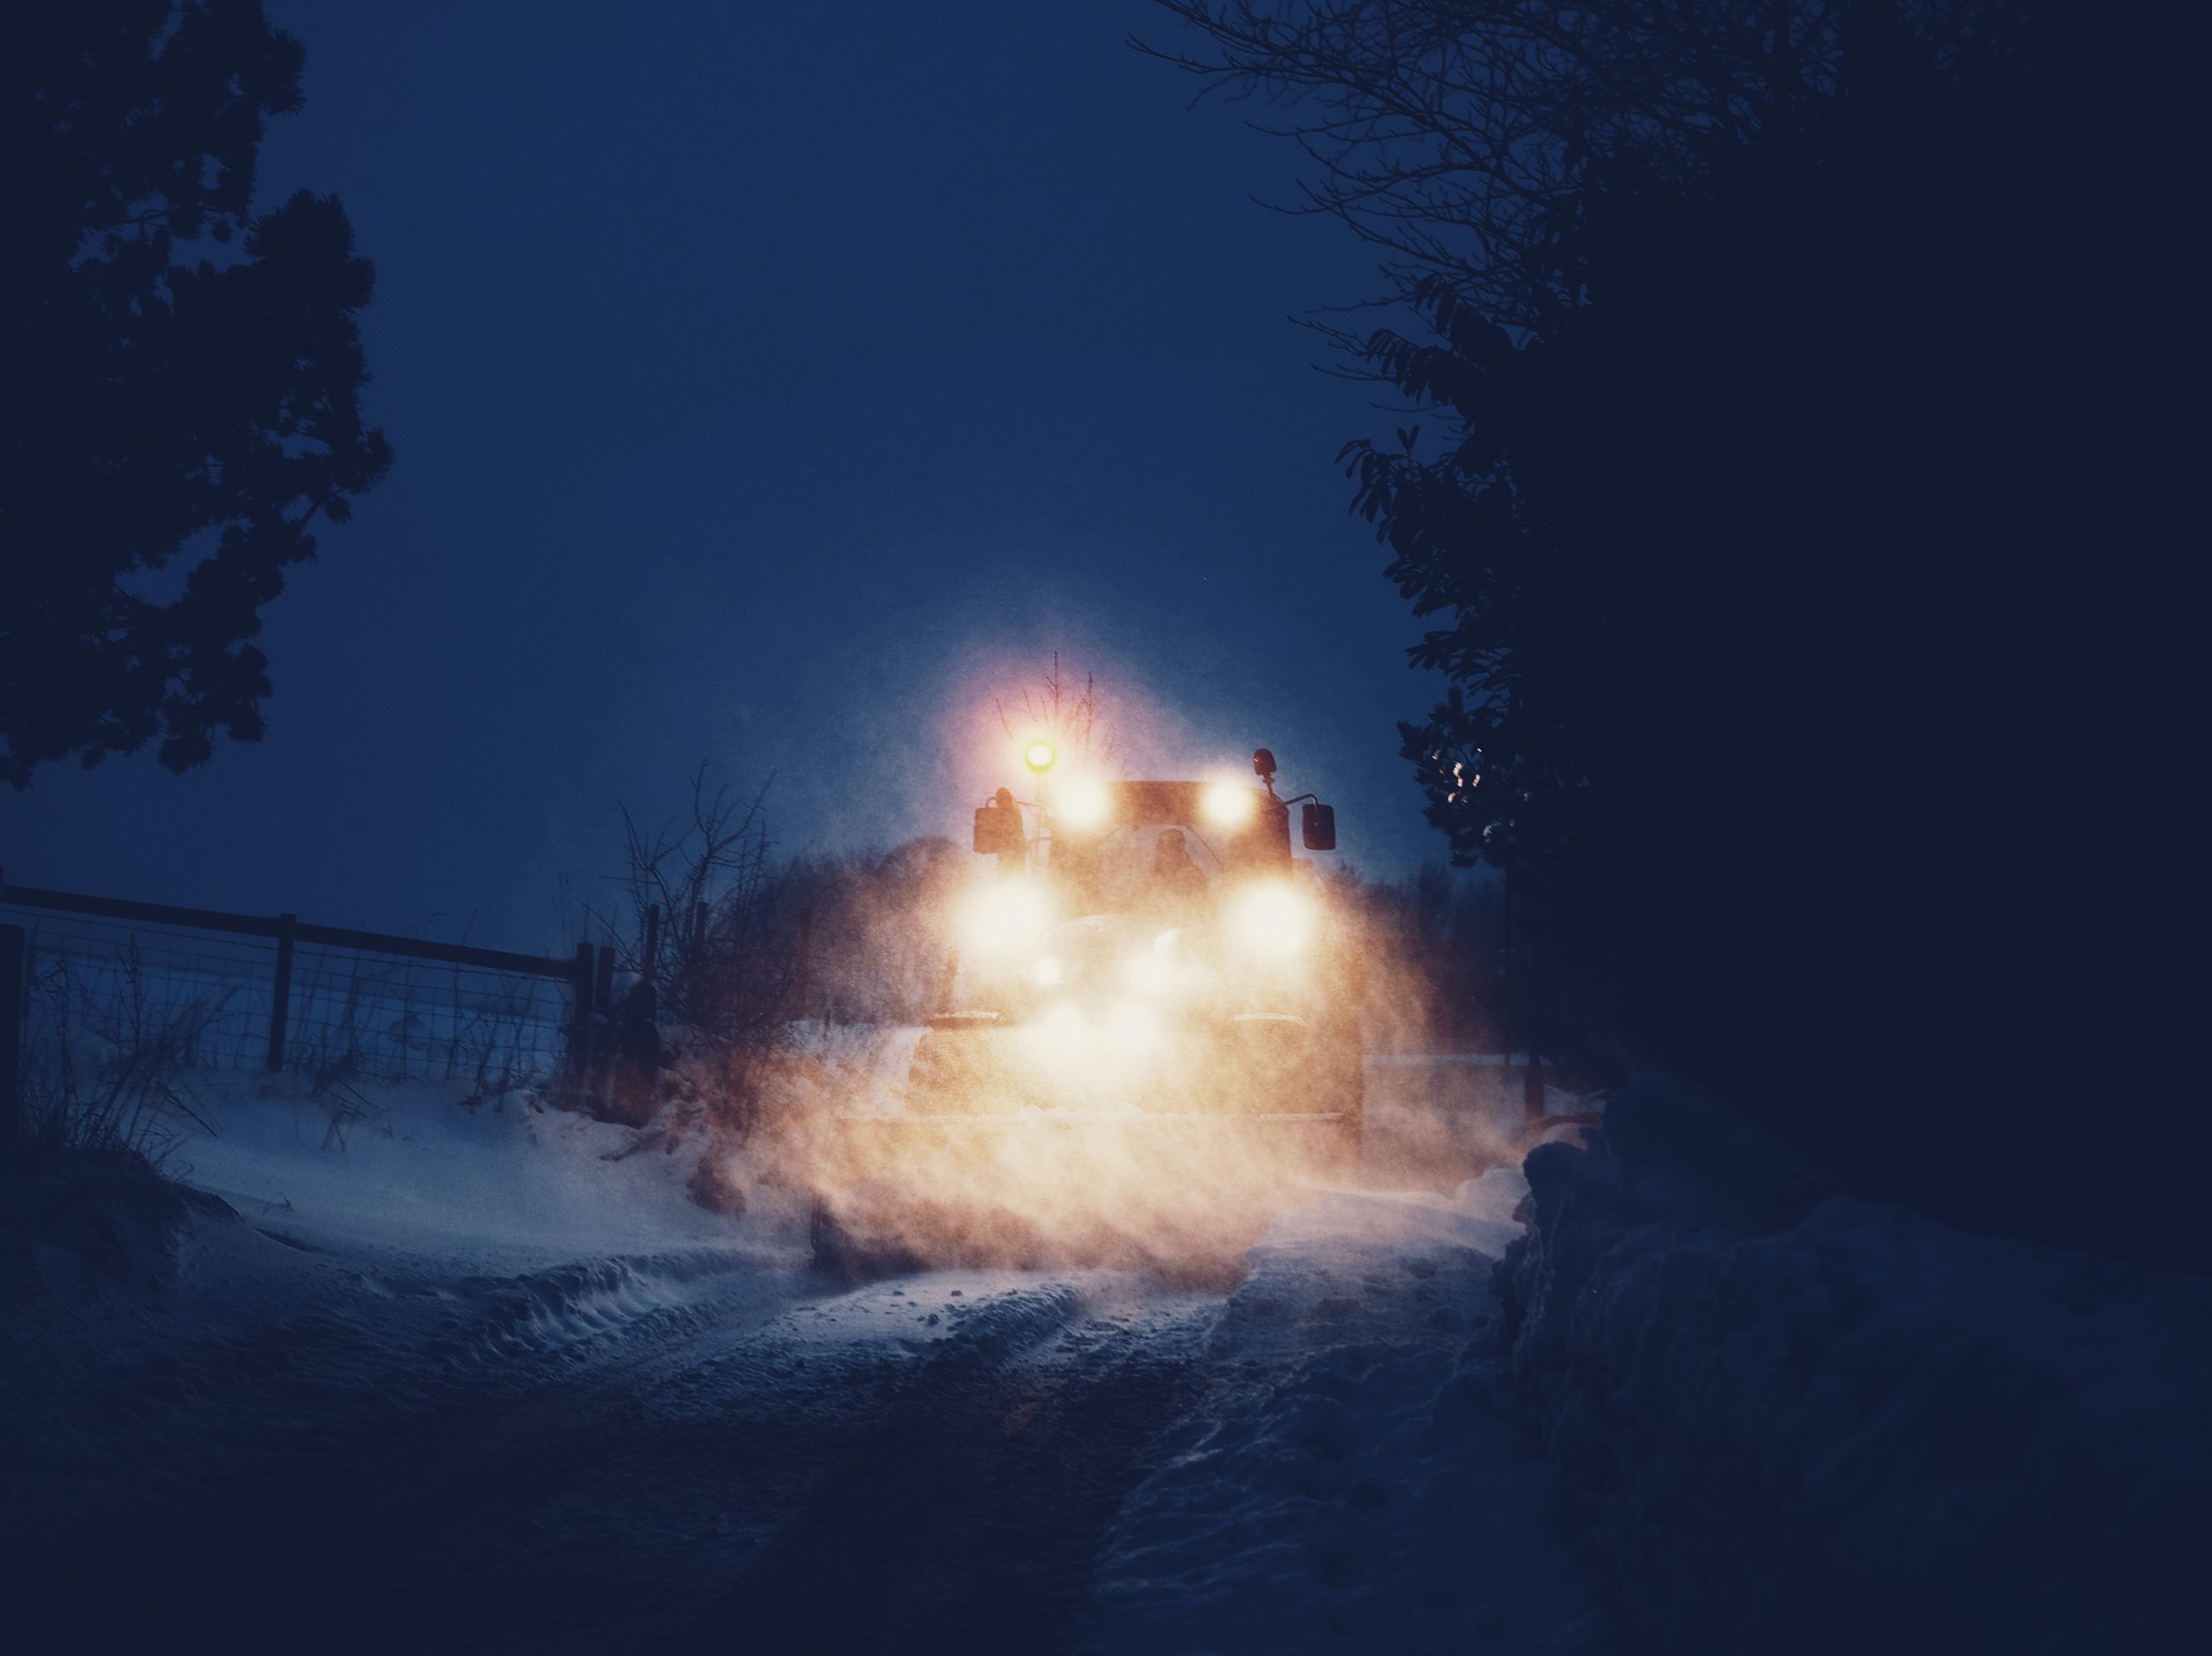 Snow Plow at night